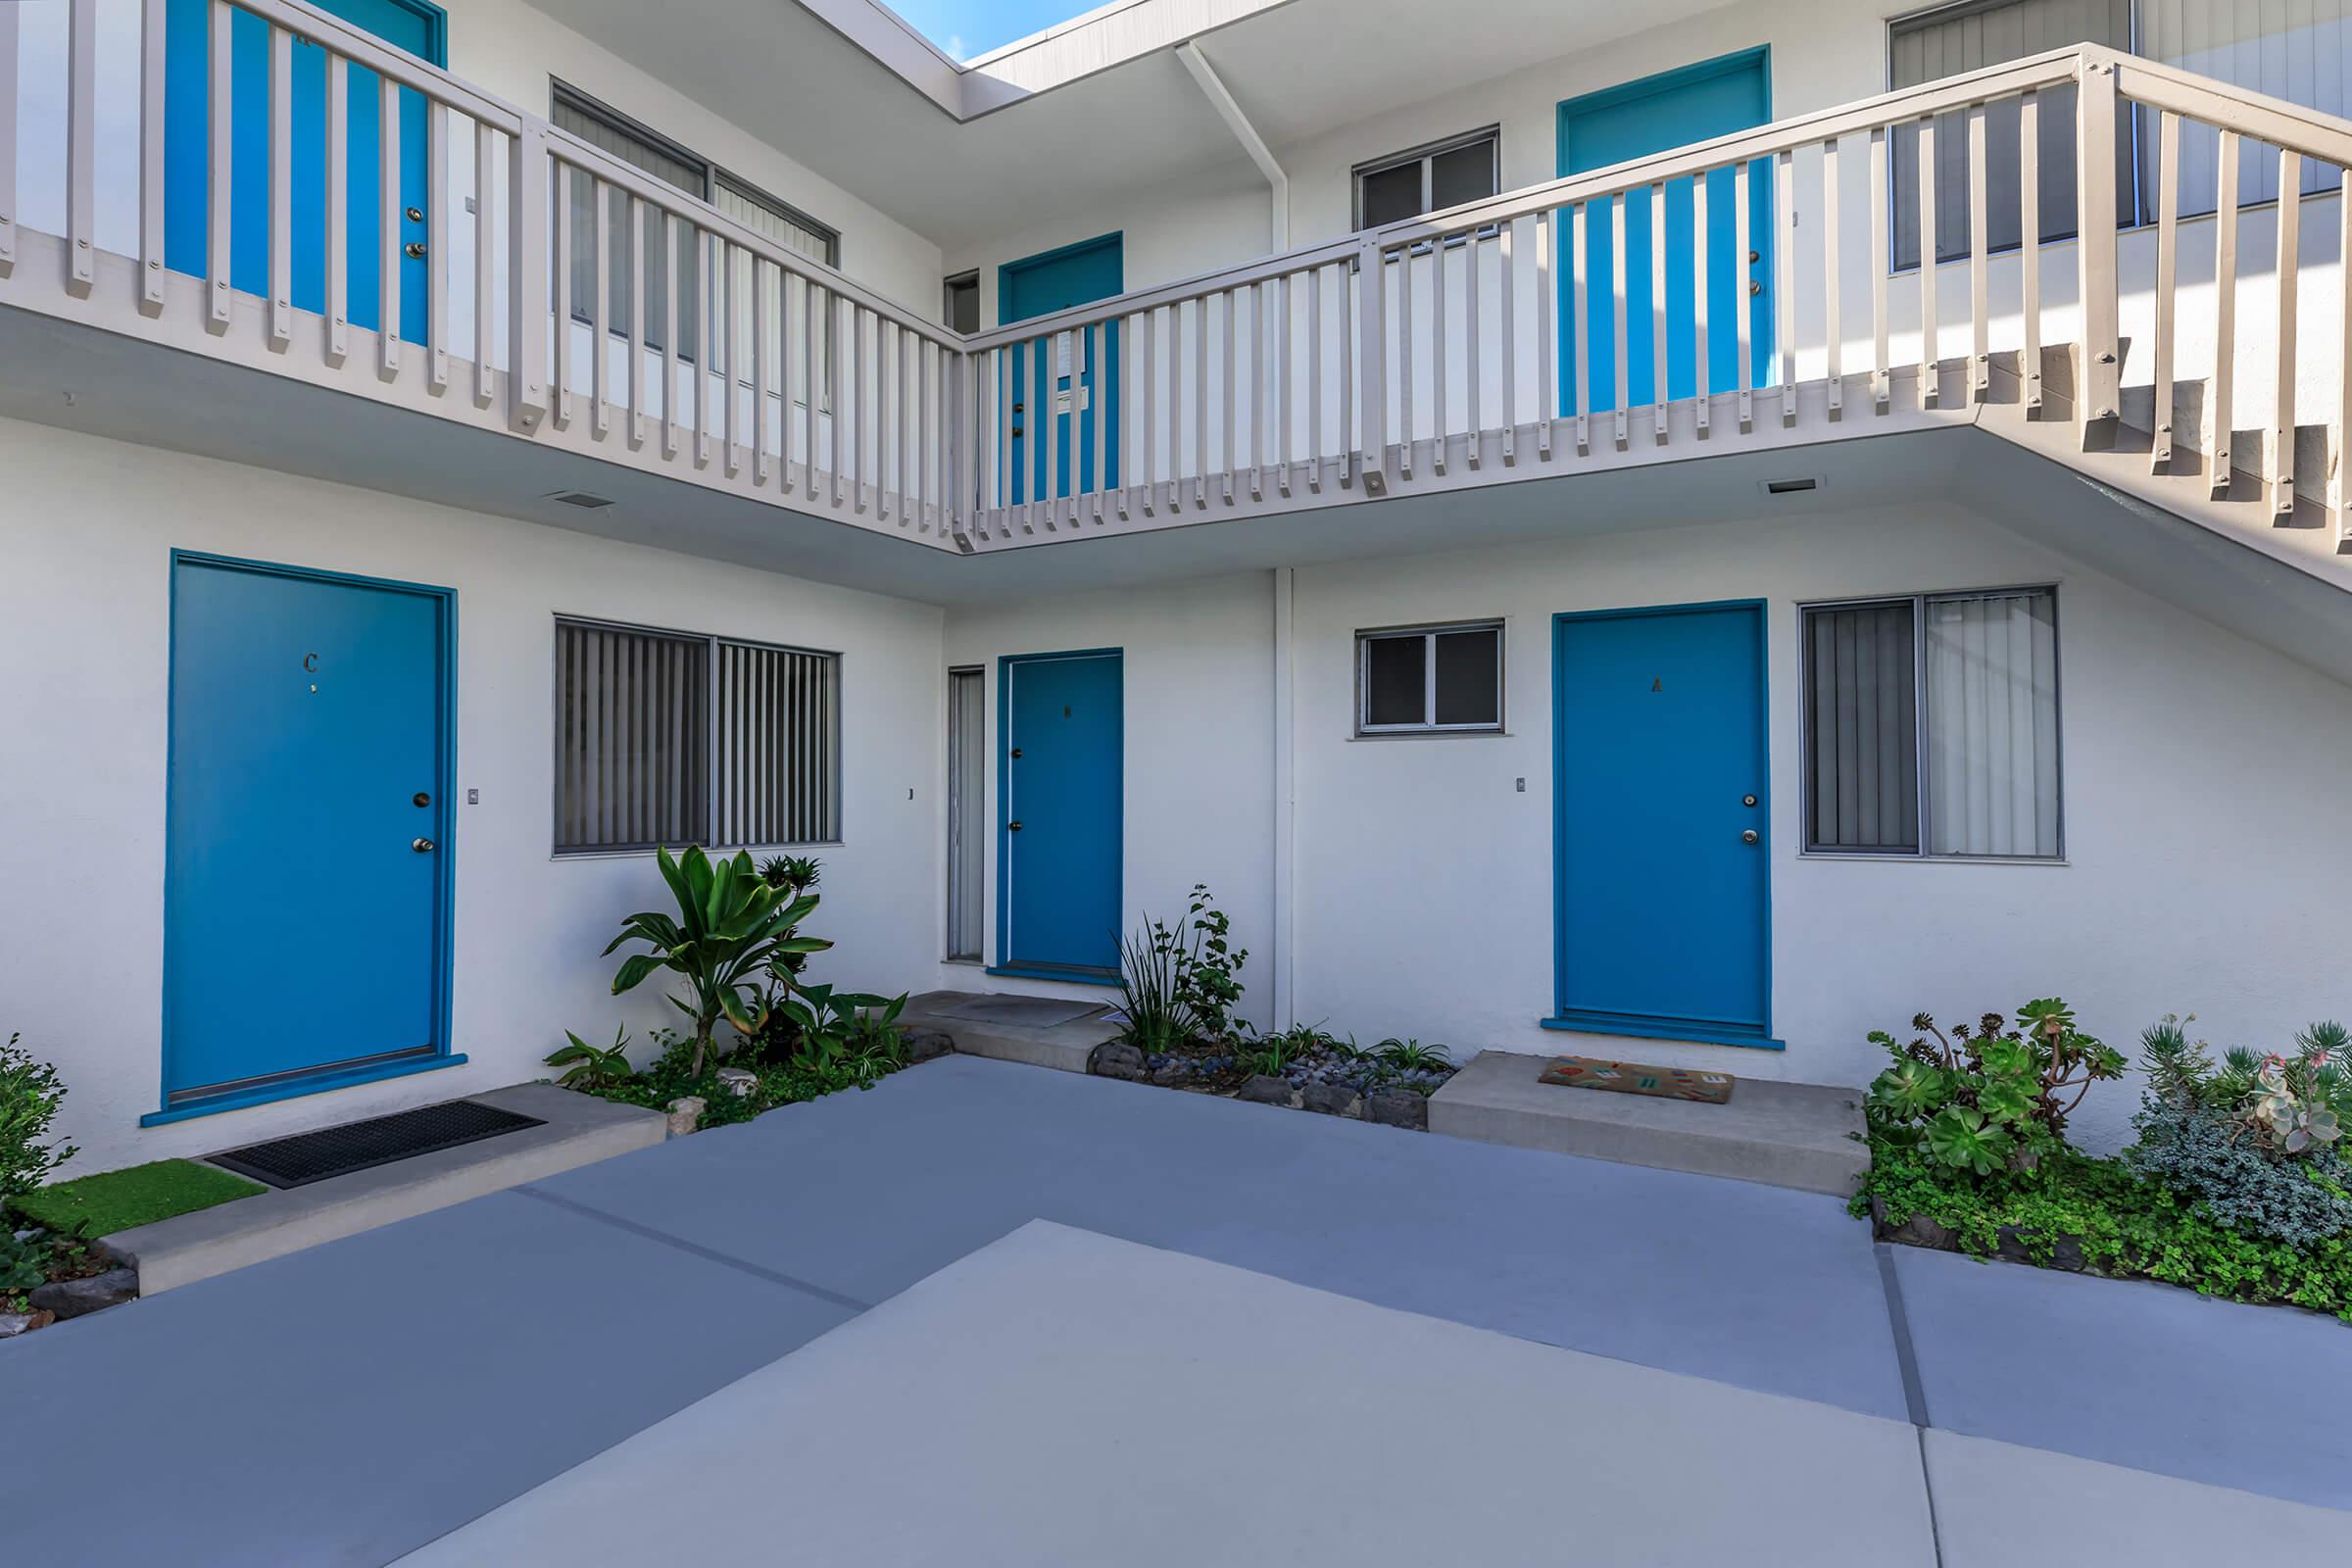 Sea Breeze Beach Apartments community building with blue doors